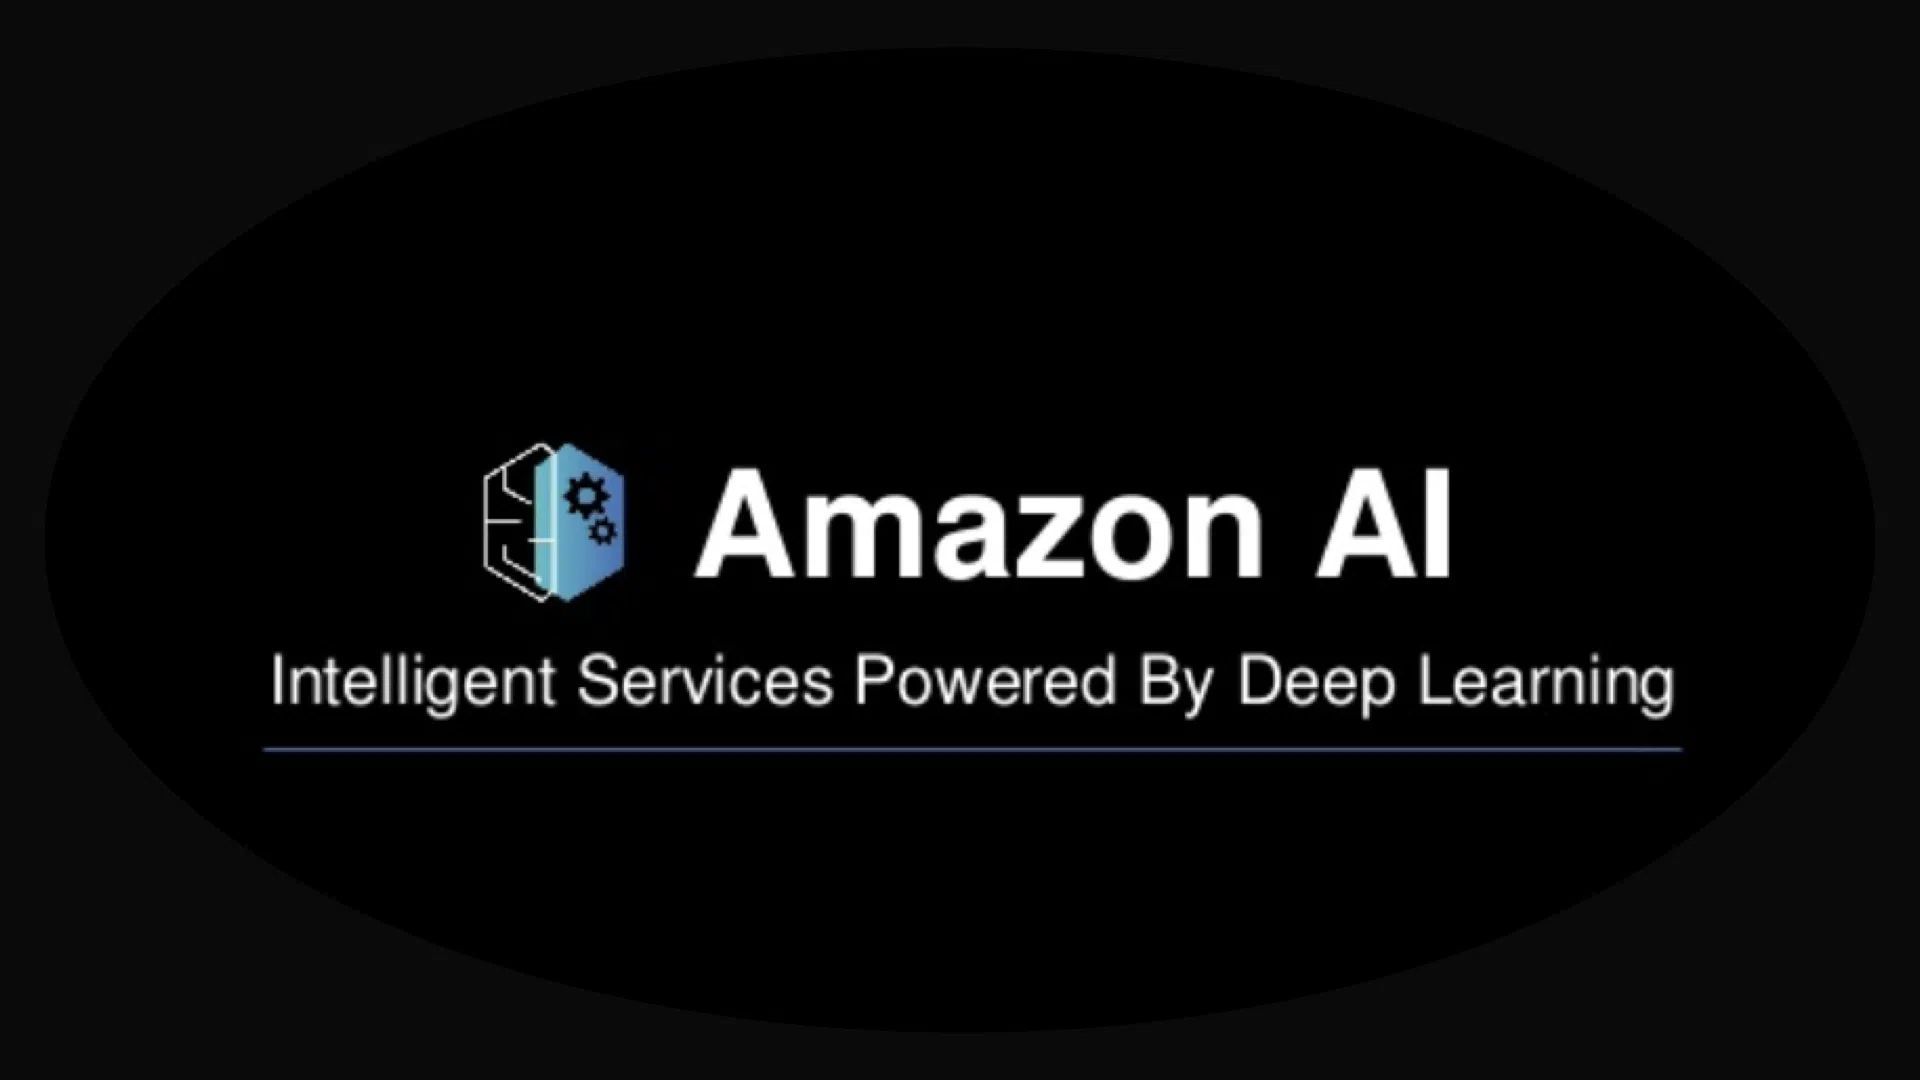 Amazon Bedrock AI